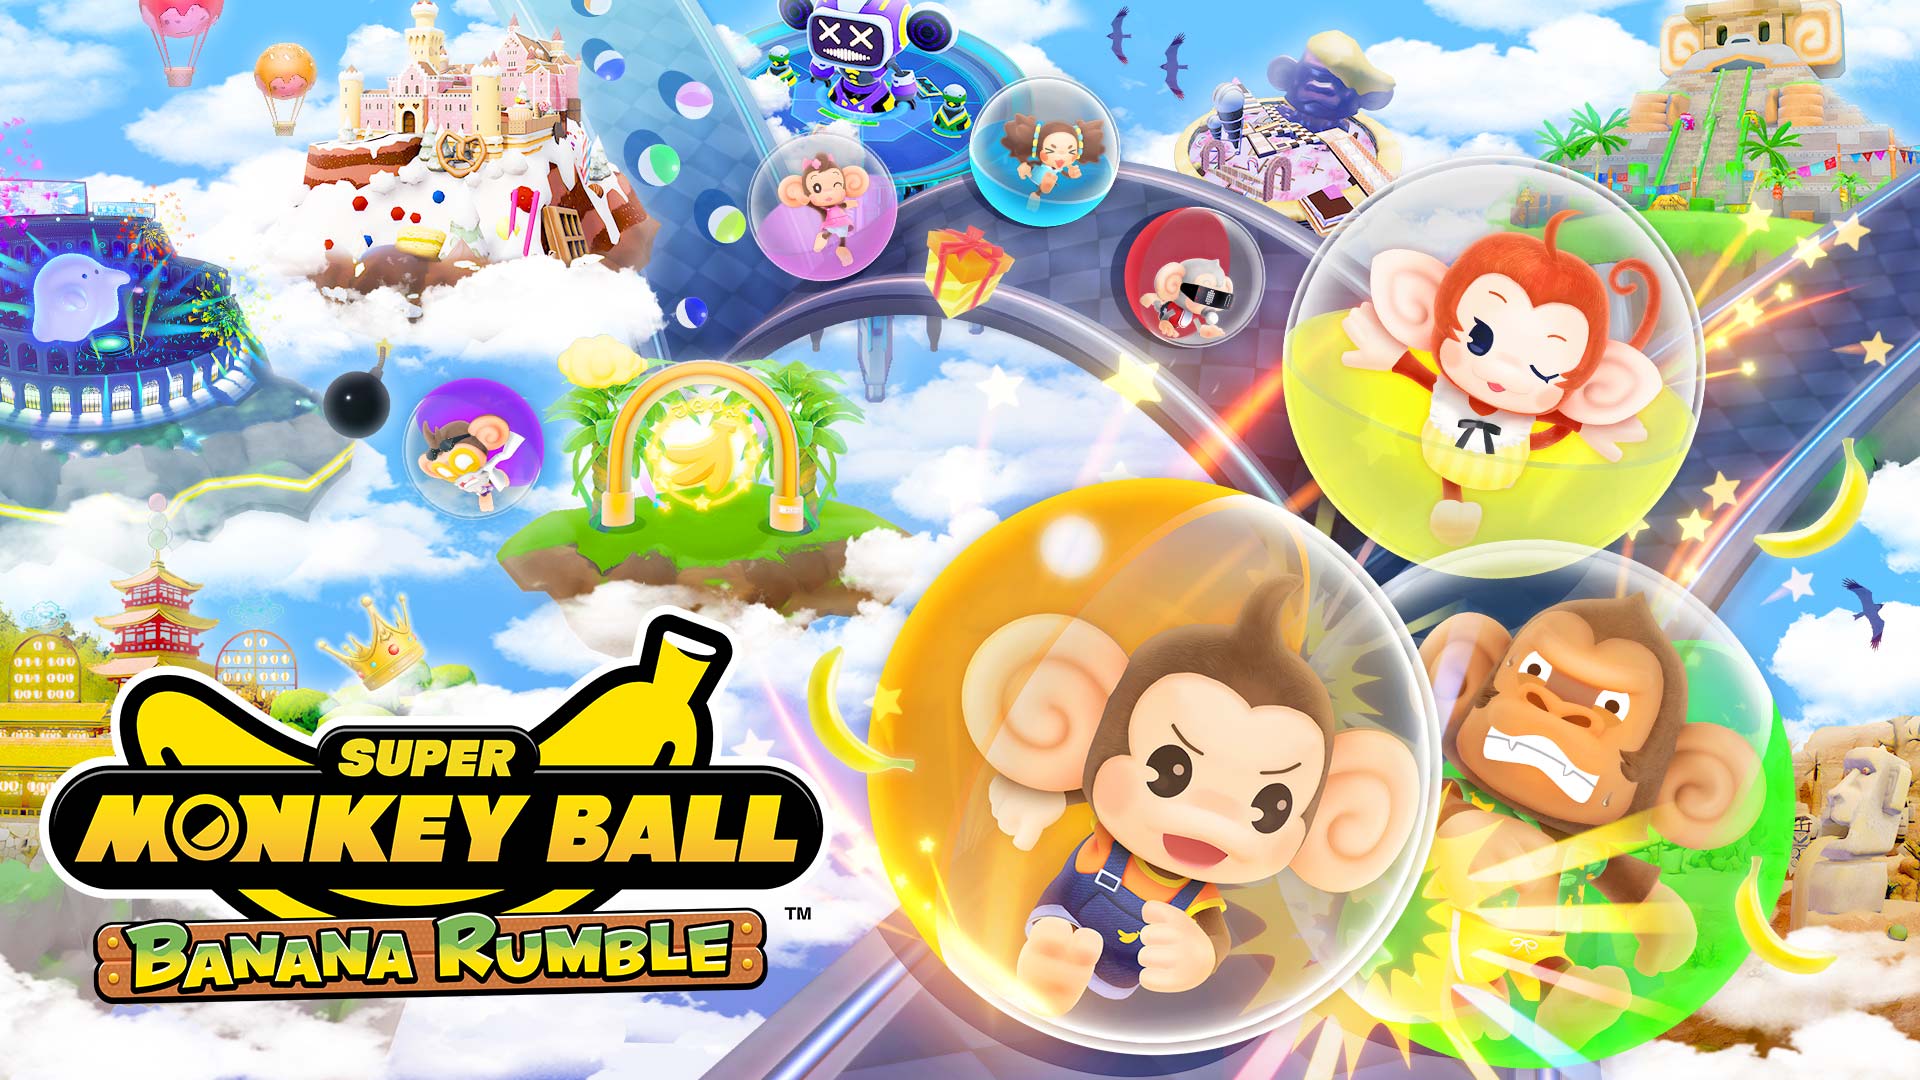 Super Monkey Ball Banana Rumble rolls onto Nintendo Switch